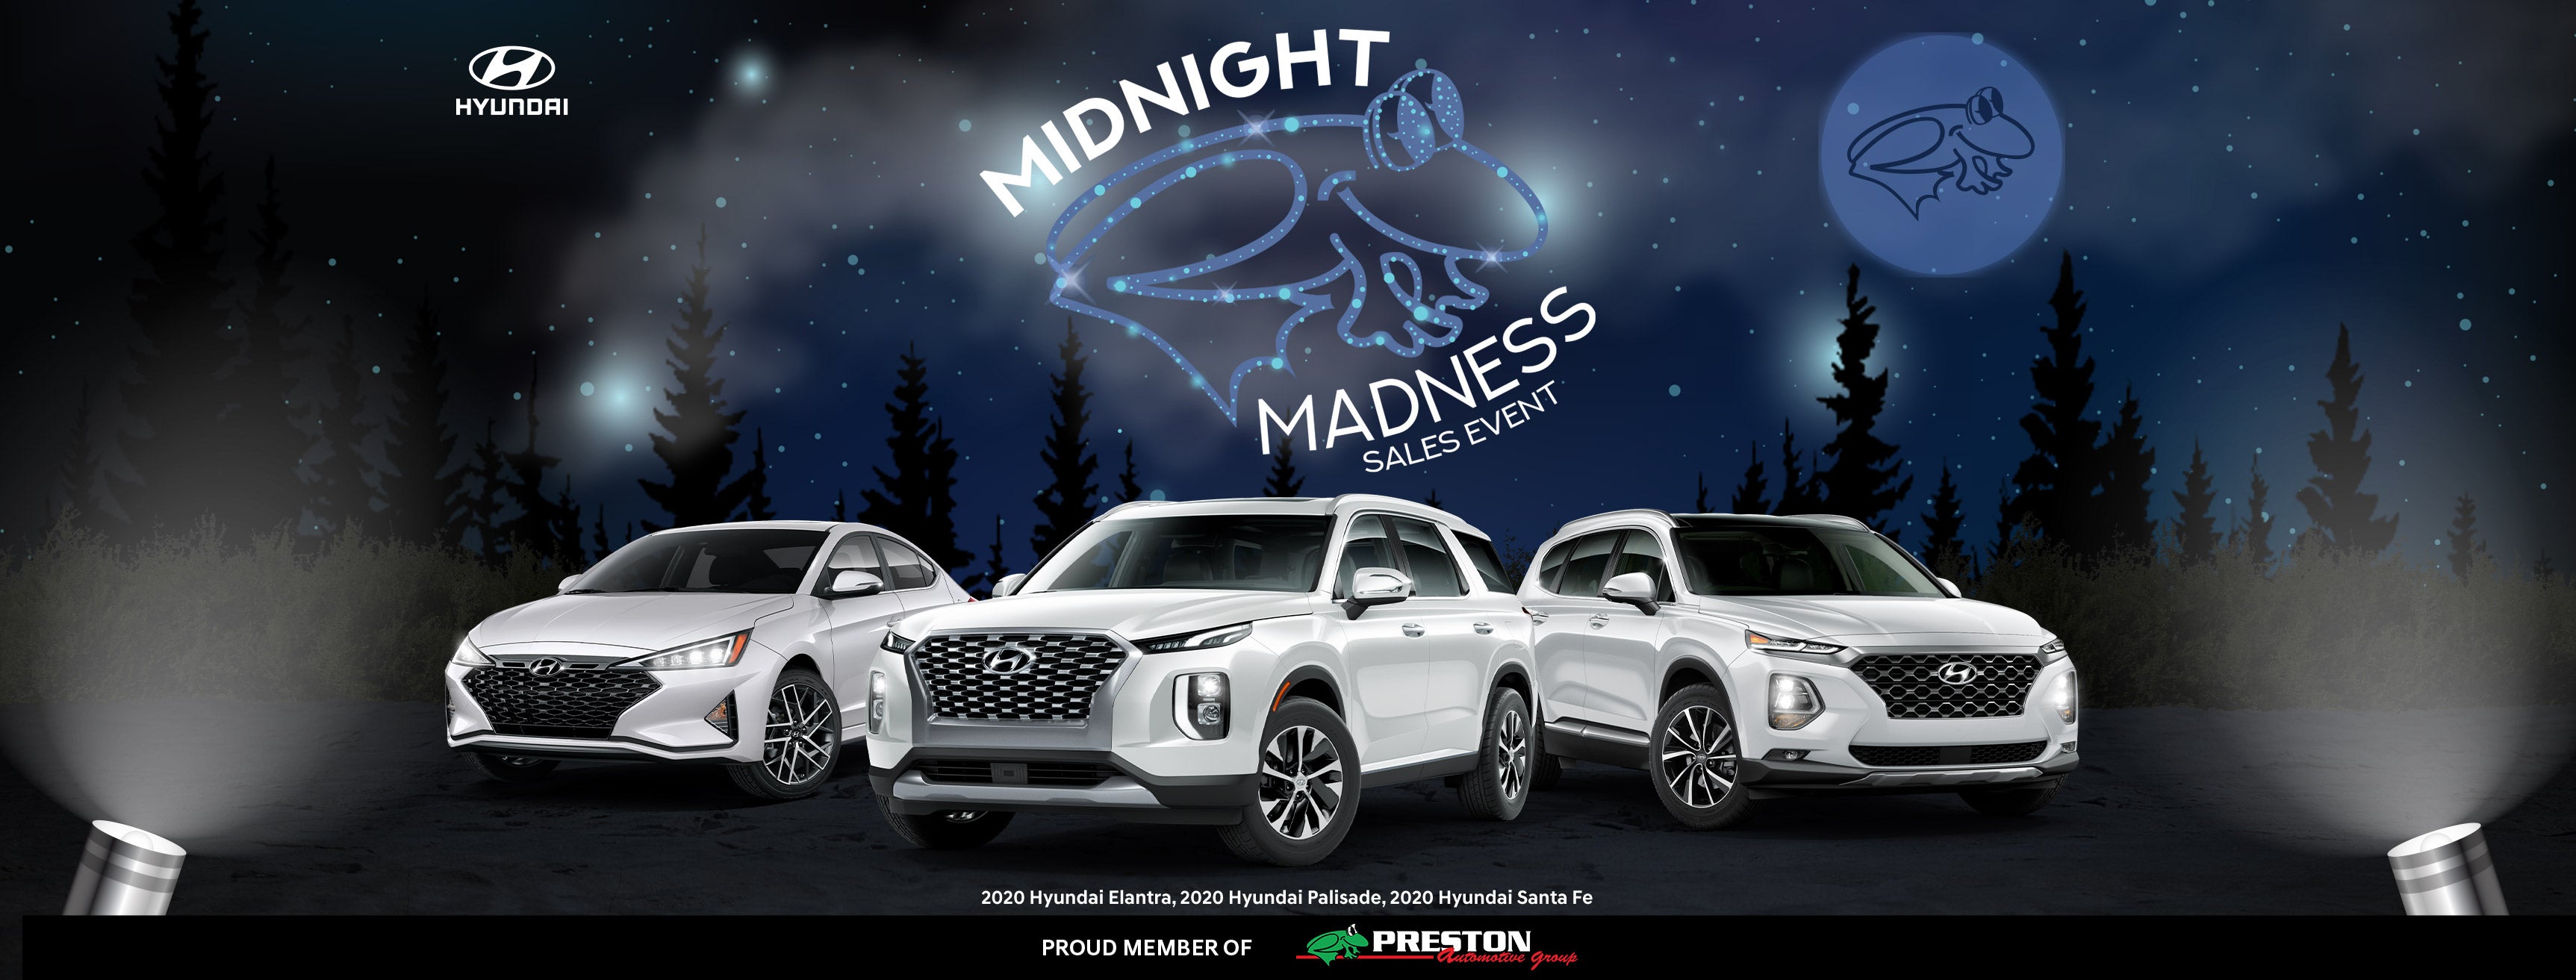 Midnight Madness Sales Event